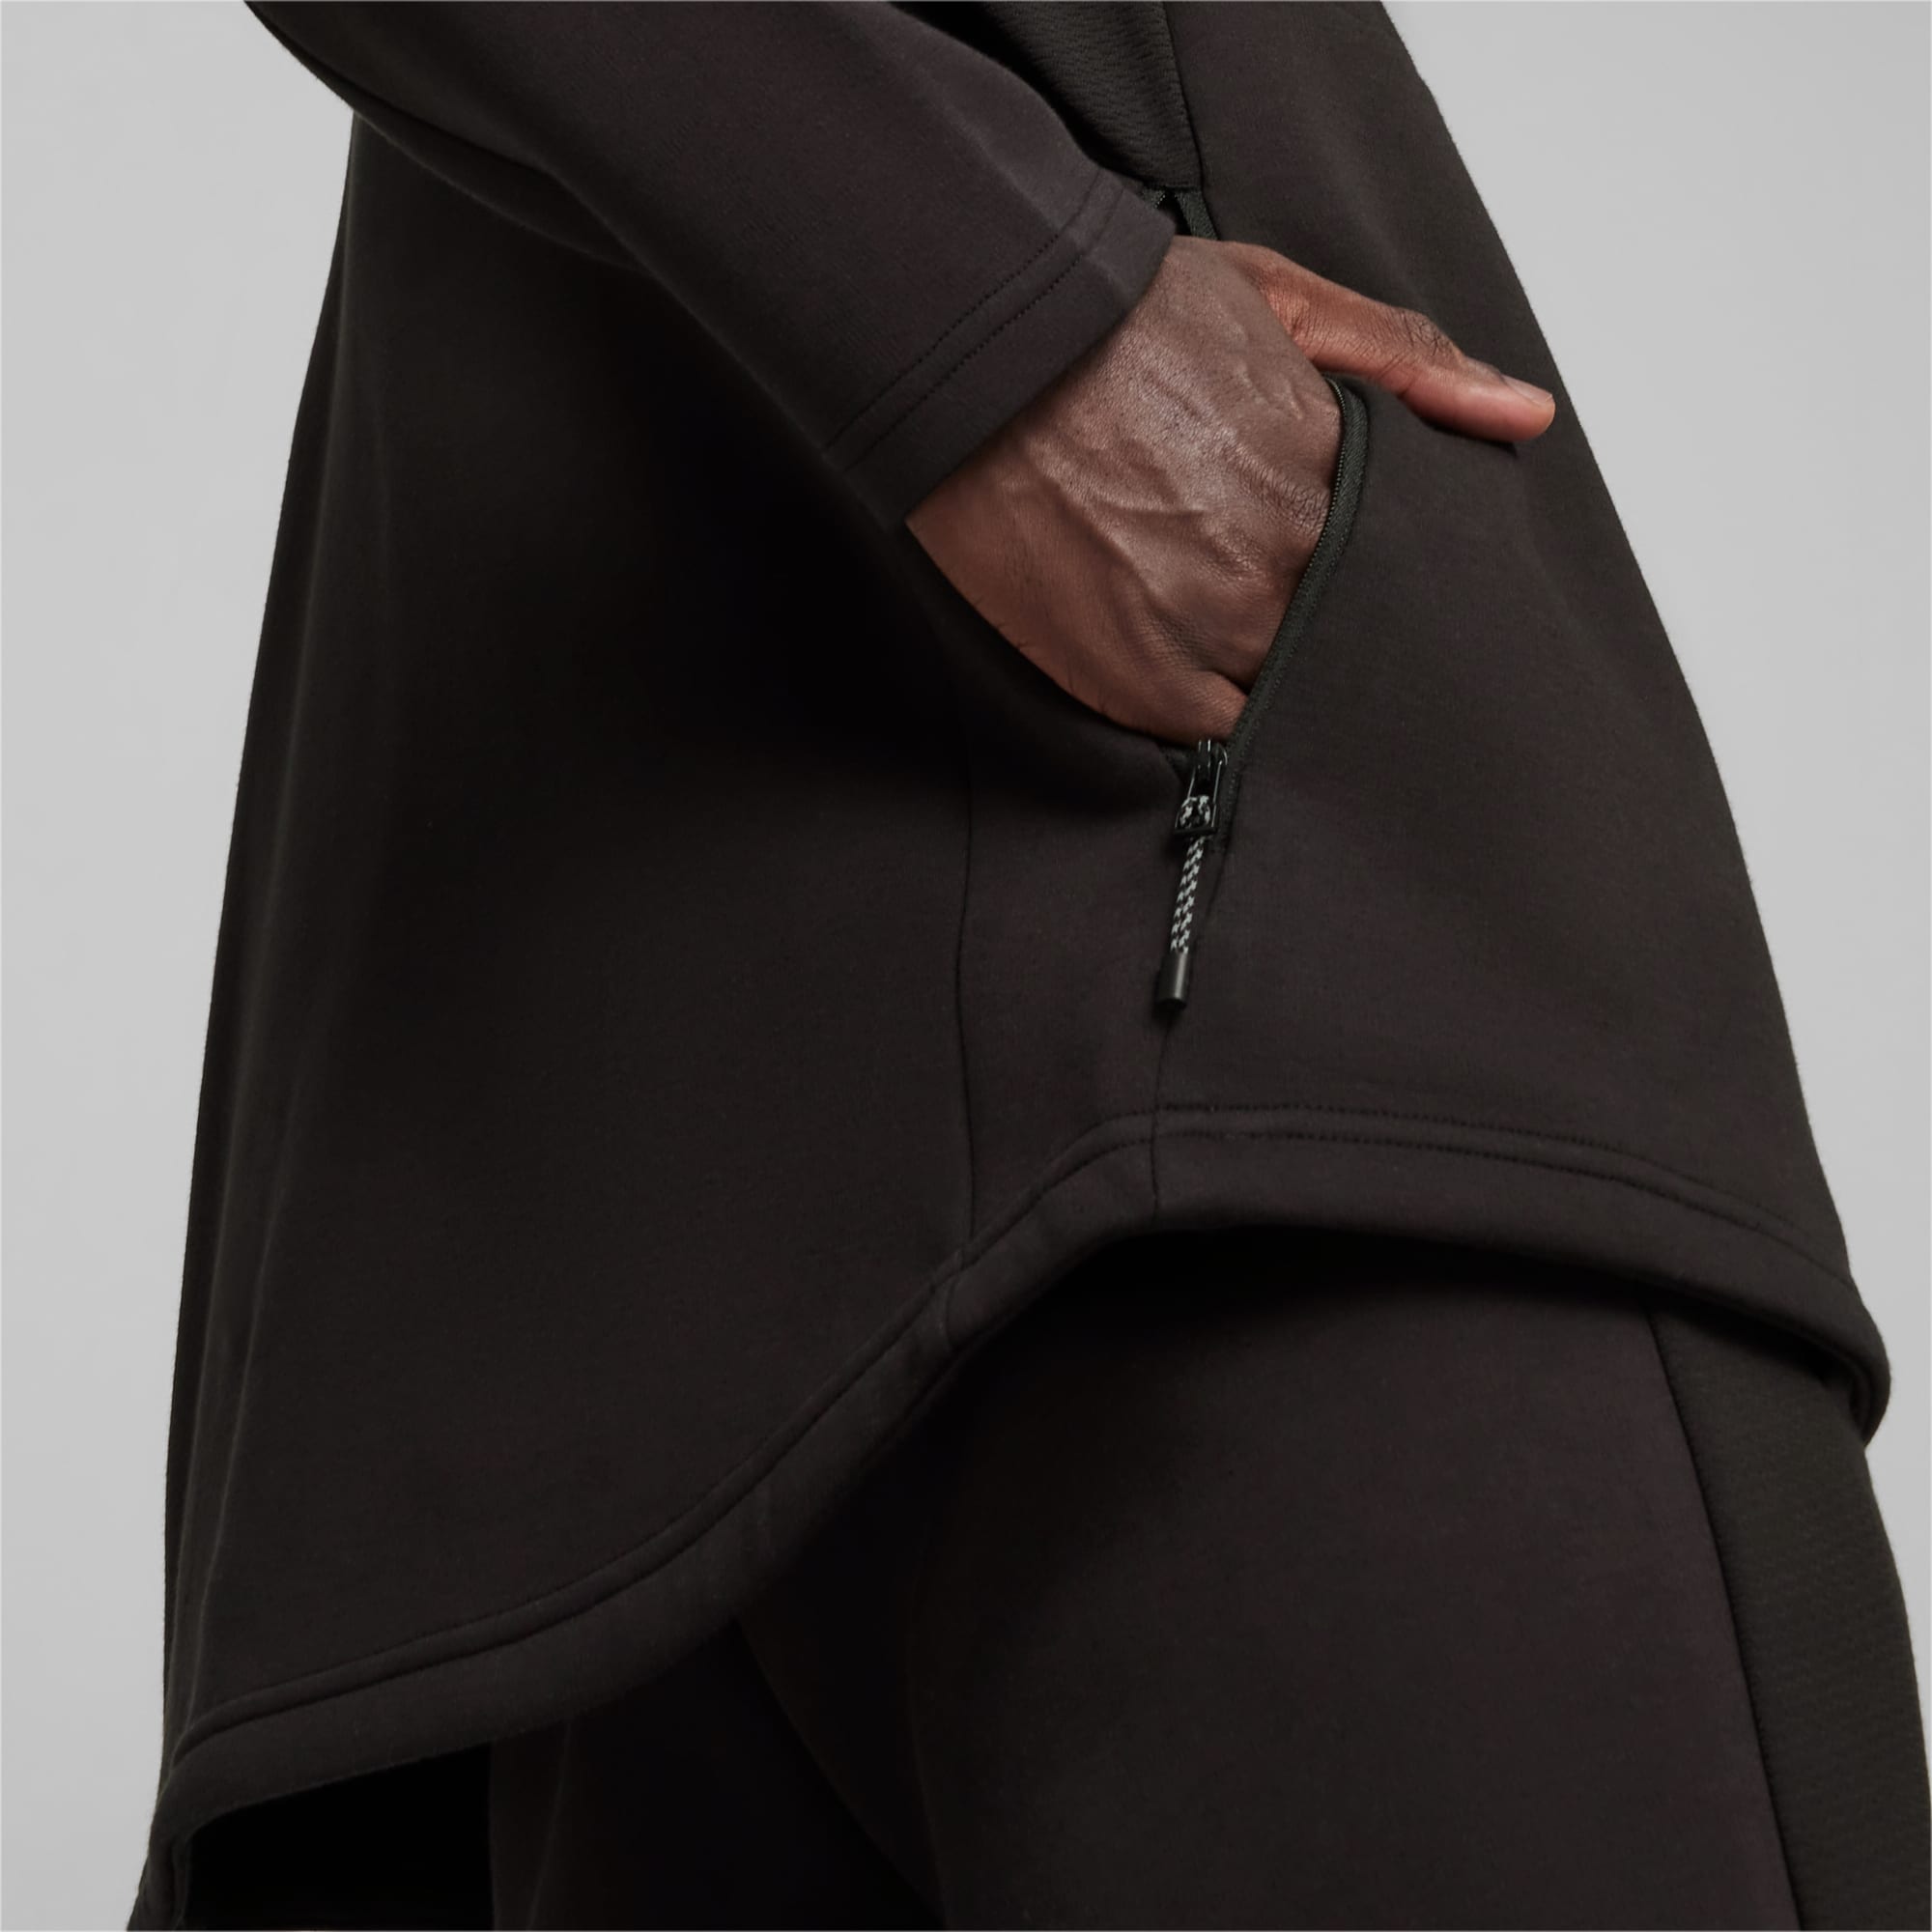 PUMA Evostripe Men's Full-Zip Hoodie, Black, Size XS, Clothing